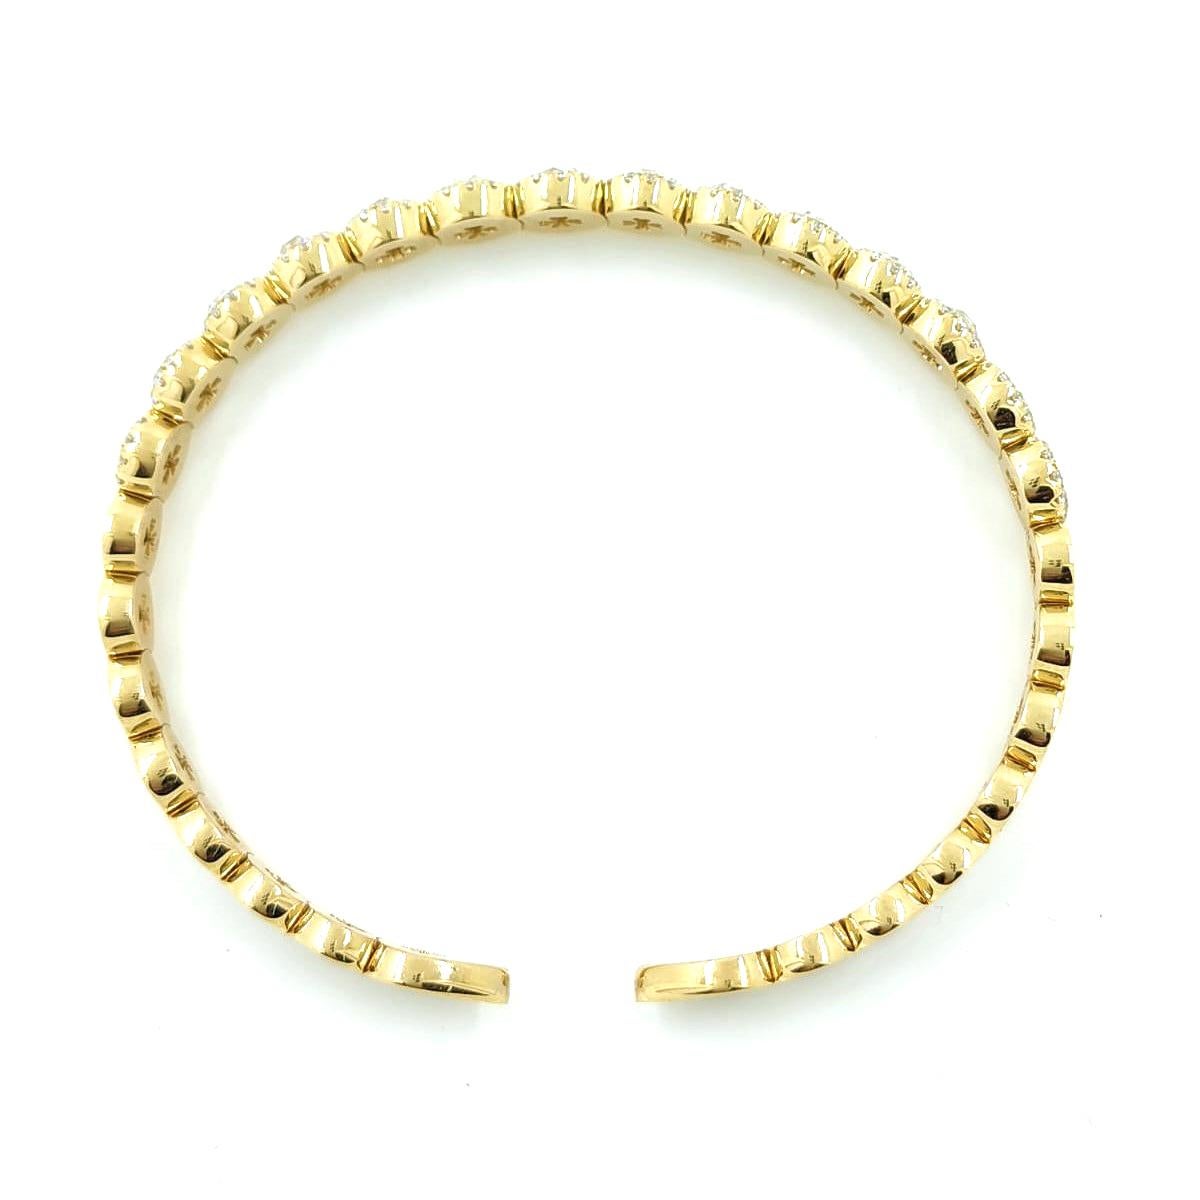 1.68 Carat Rose Cut Diamond Open Cuff Bangle Bracelet in 18 Karat Yellow Gold For Sale 1